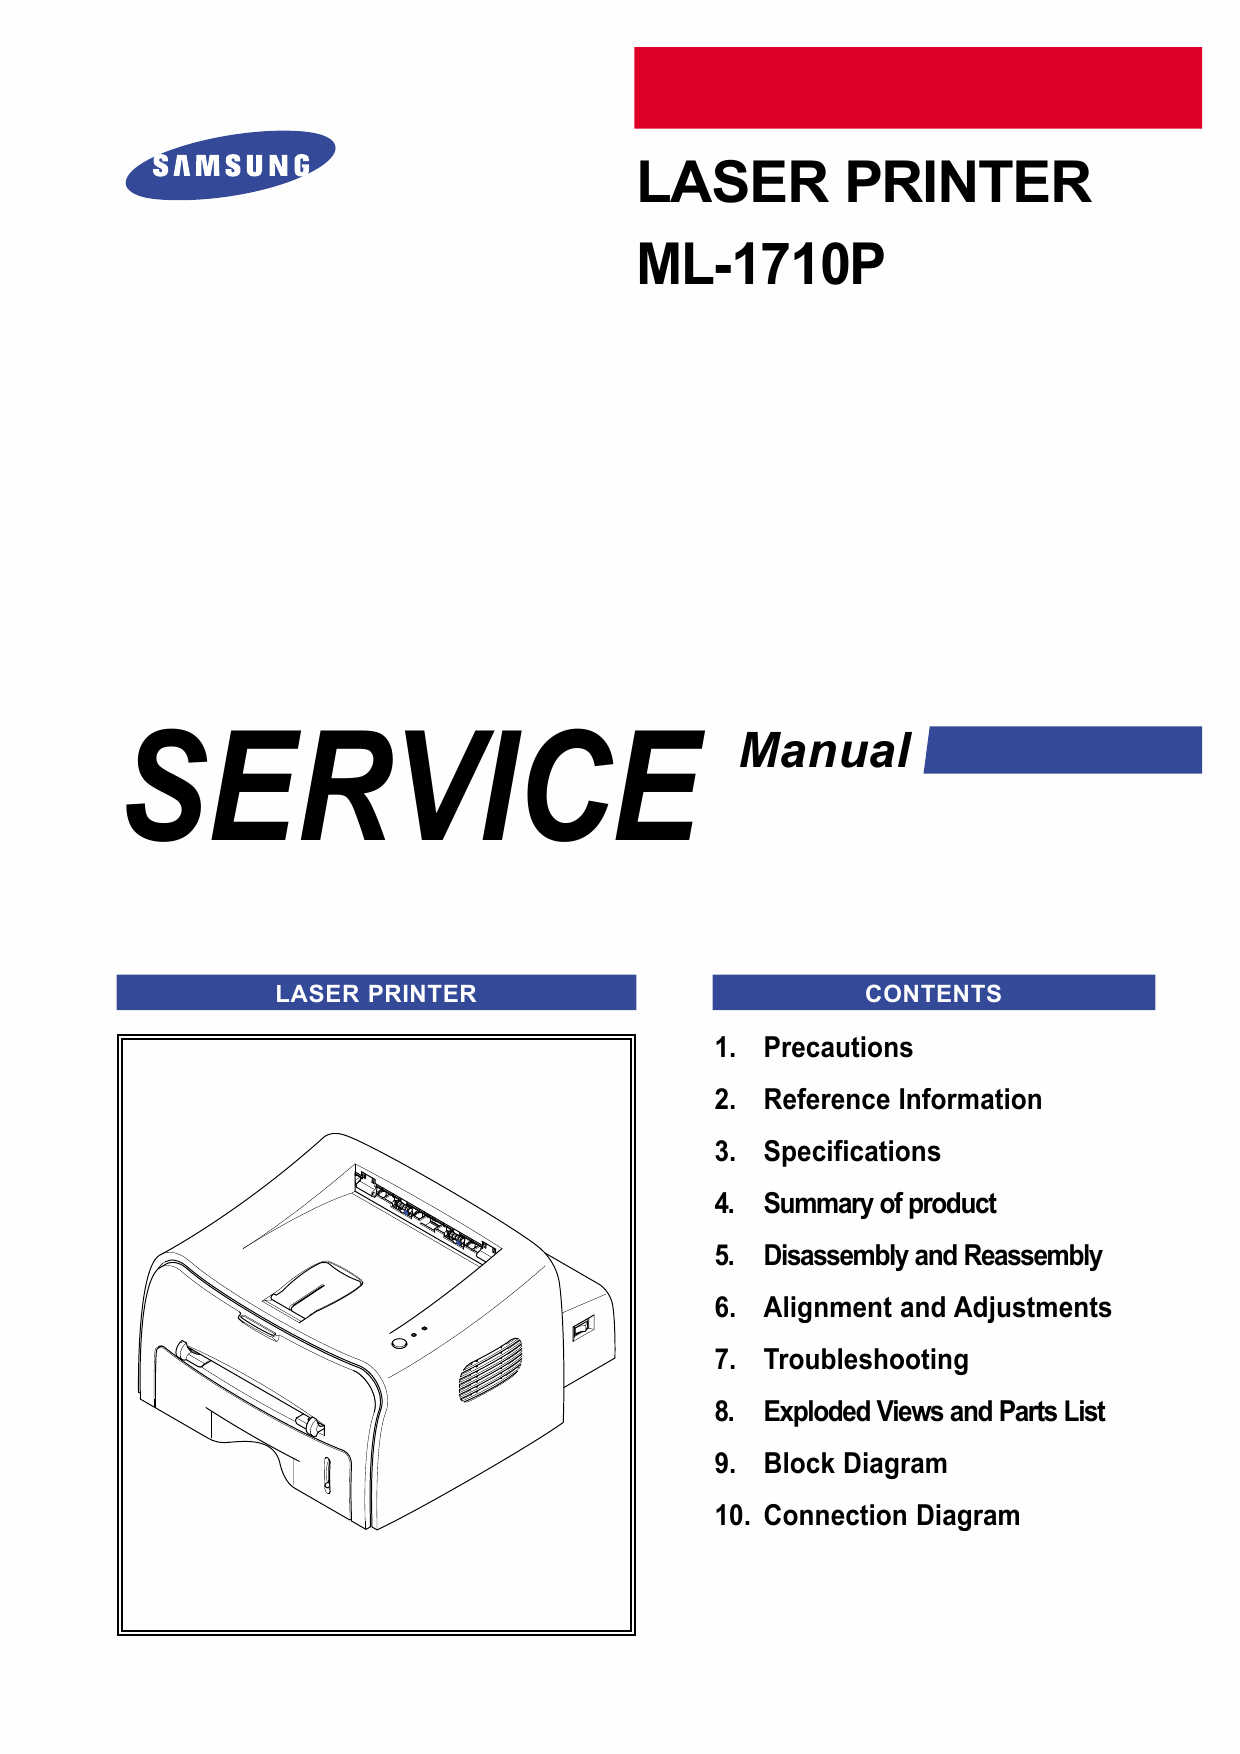 Samsung Laser-Printer ML-1710P Parts and Service Manual-1